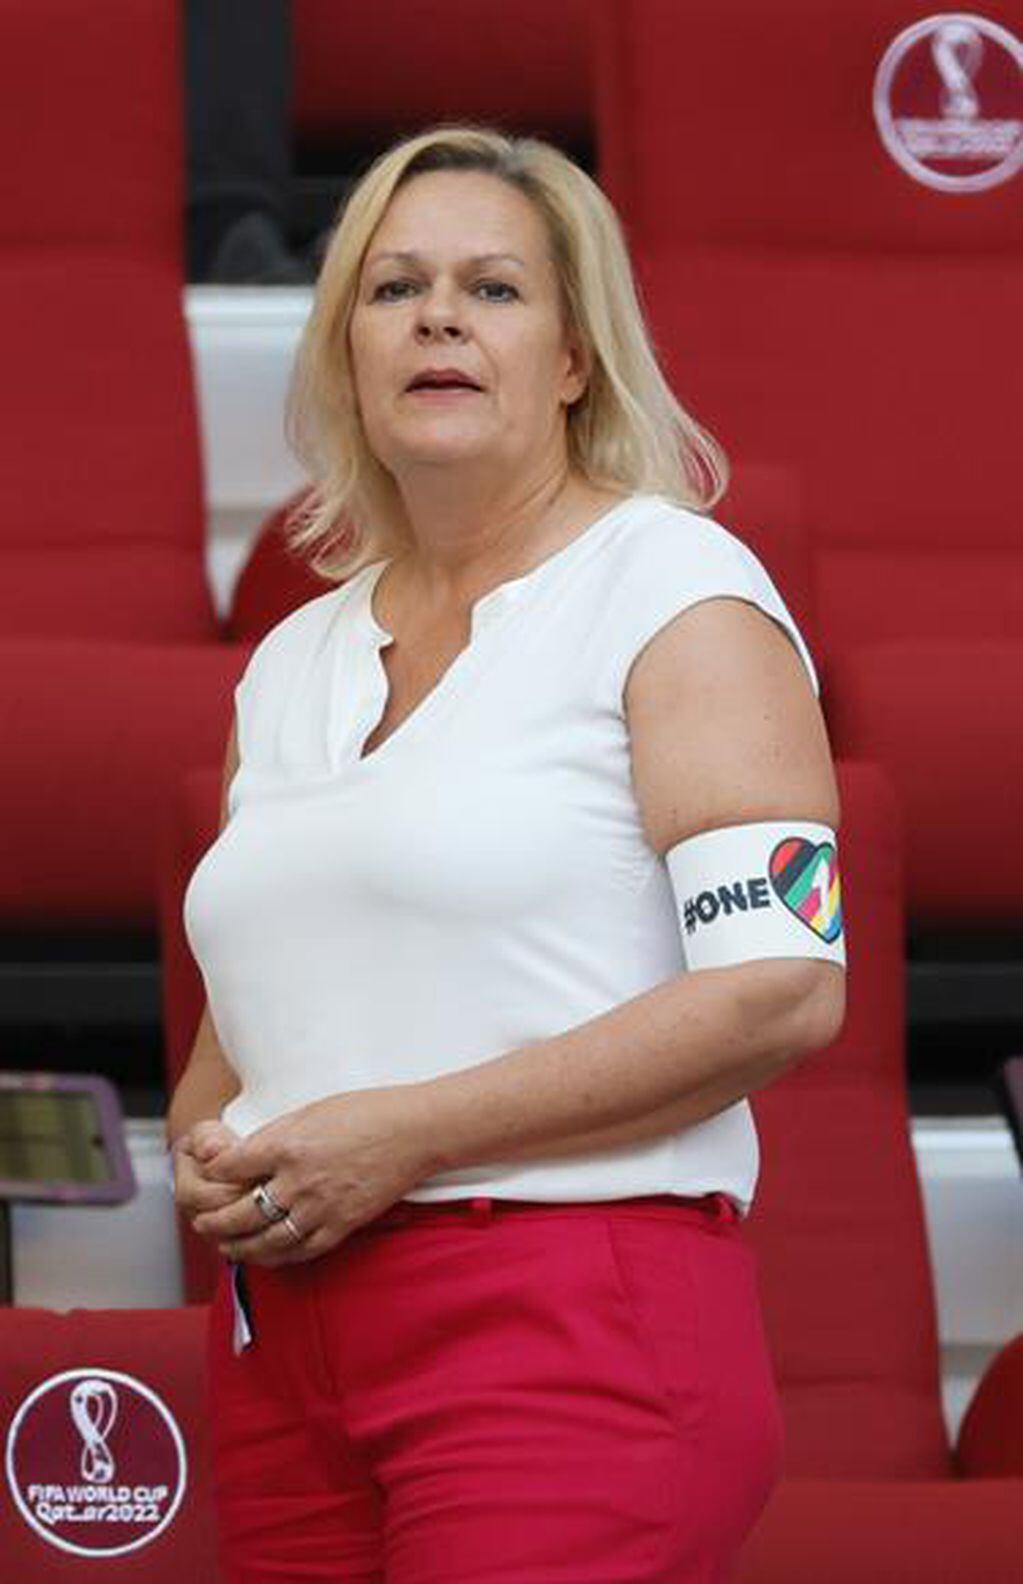 Otra protesta de Alemania contra la FIFA: ministra Nancy Faeser se puso el  brazalete de la discordia al lado de Gianni Infantino | Deportes